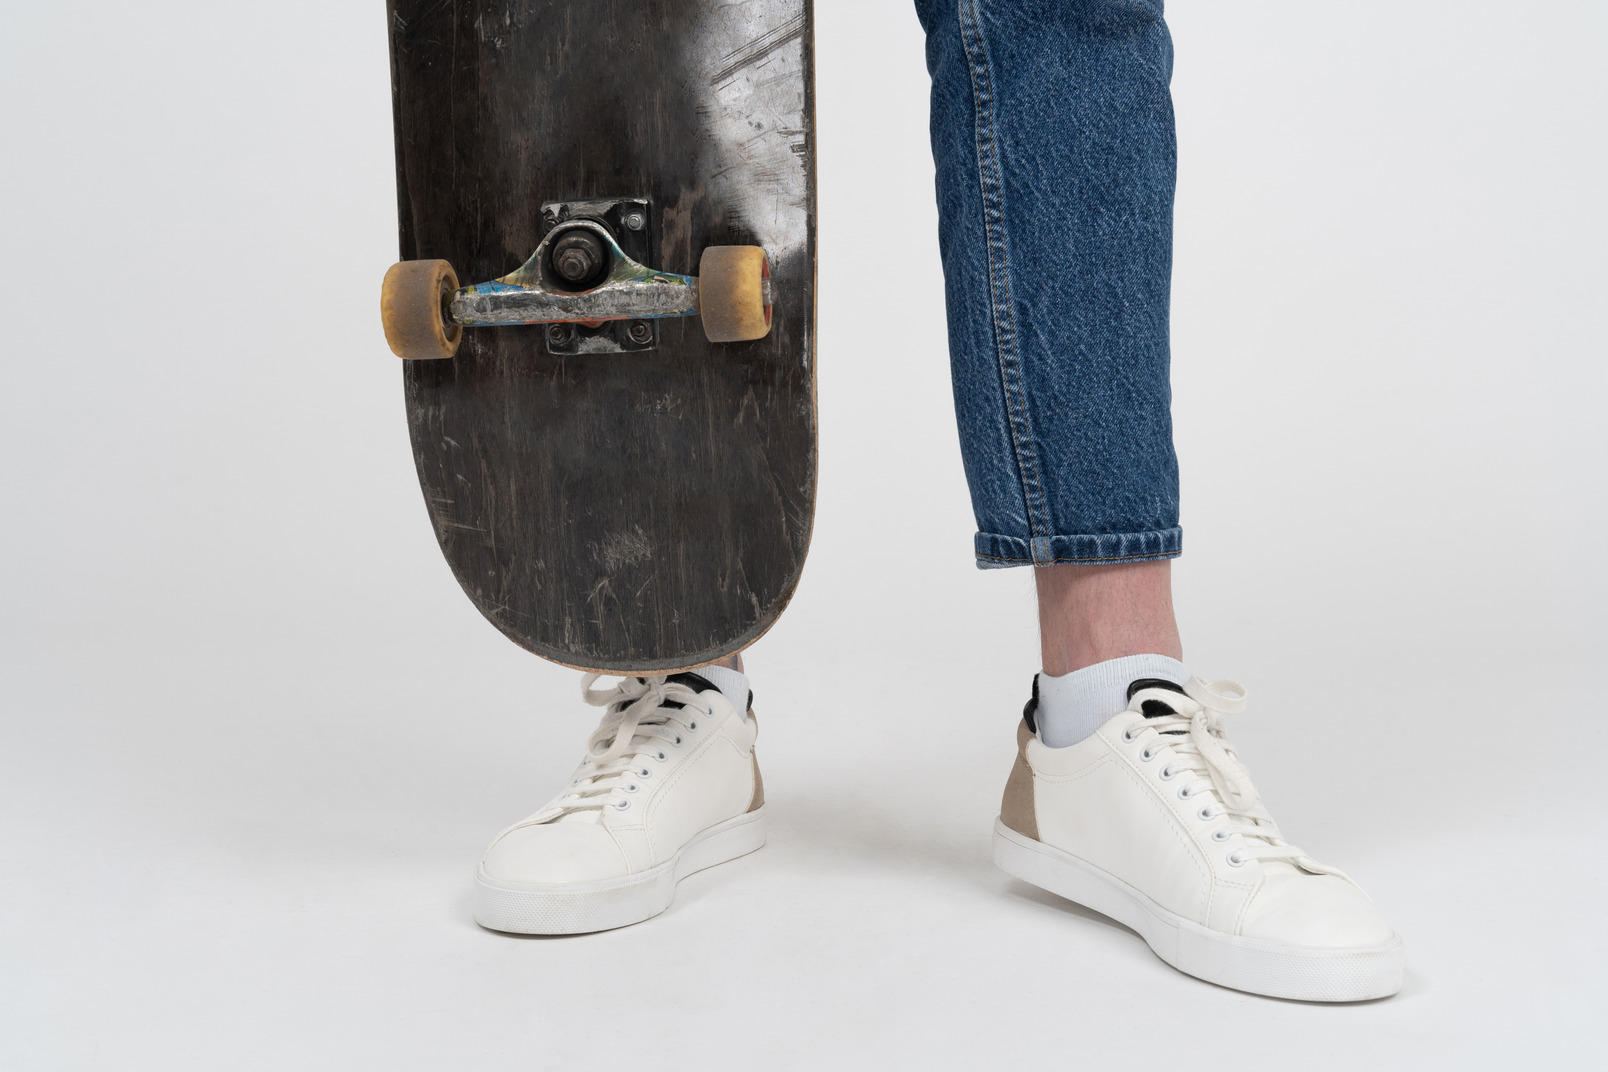 Legs and skateboard